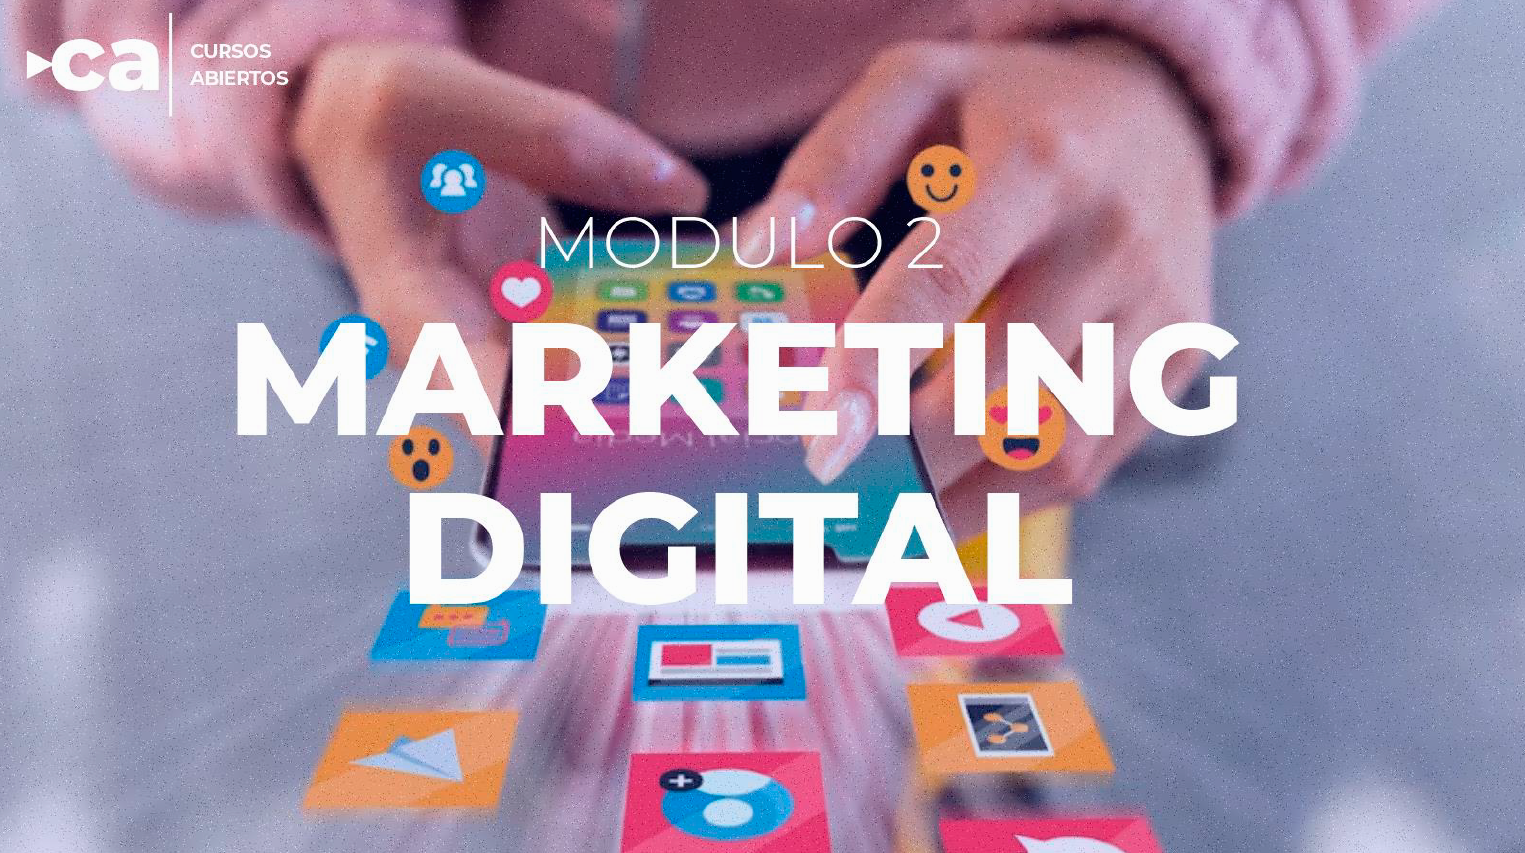 Marketing Digital Modulo 2 Marketing02